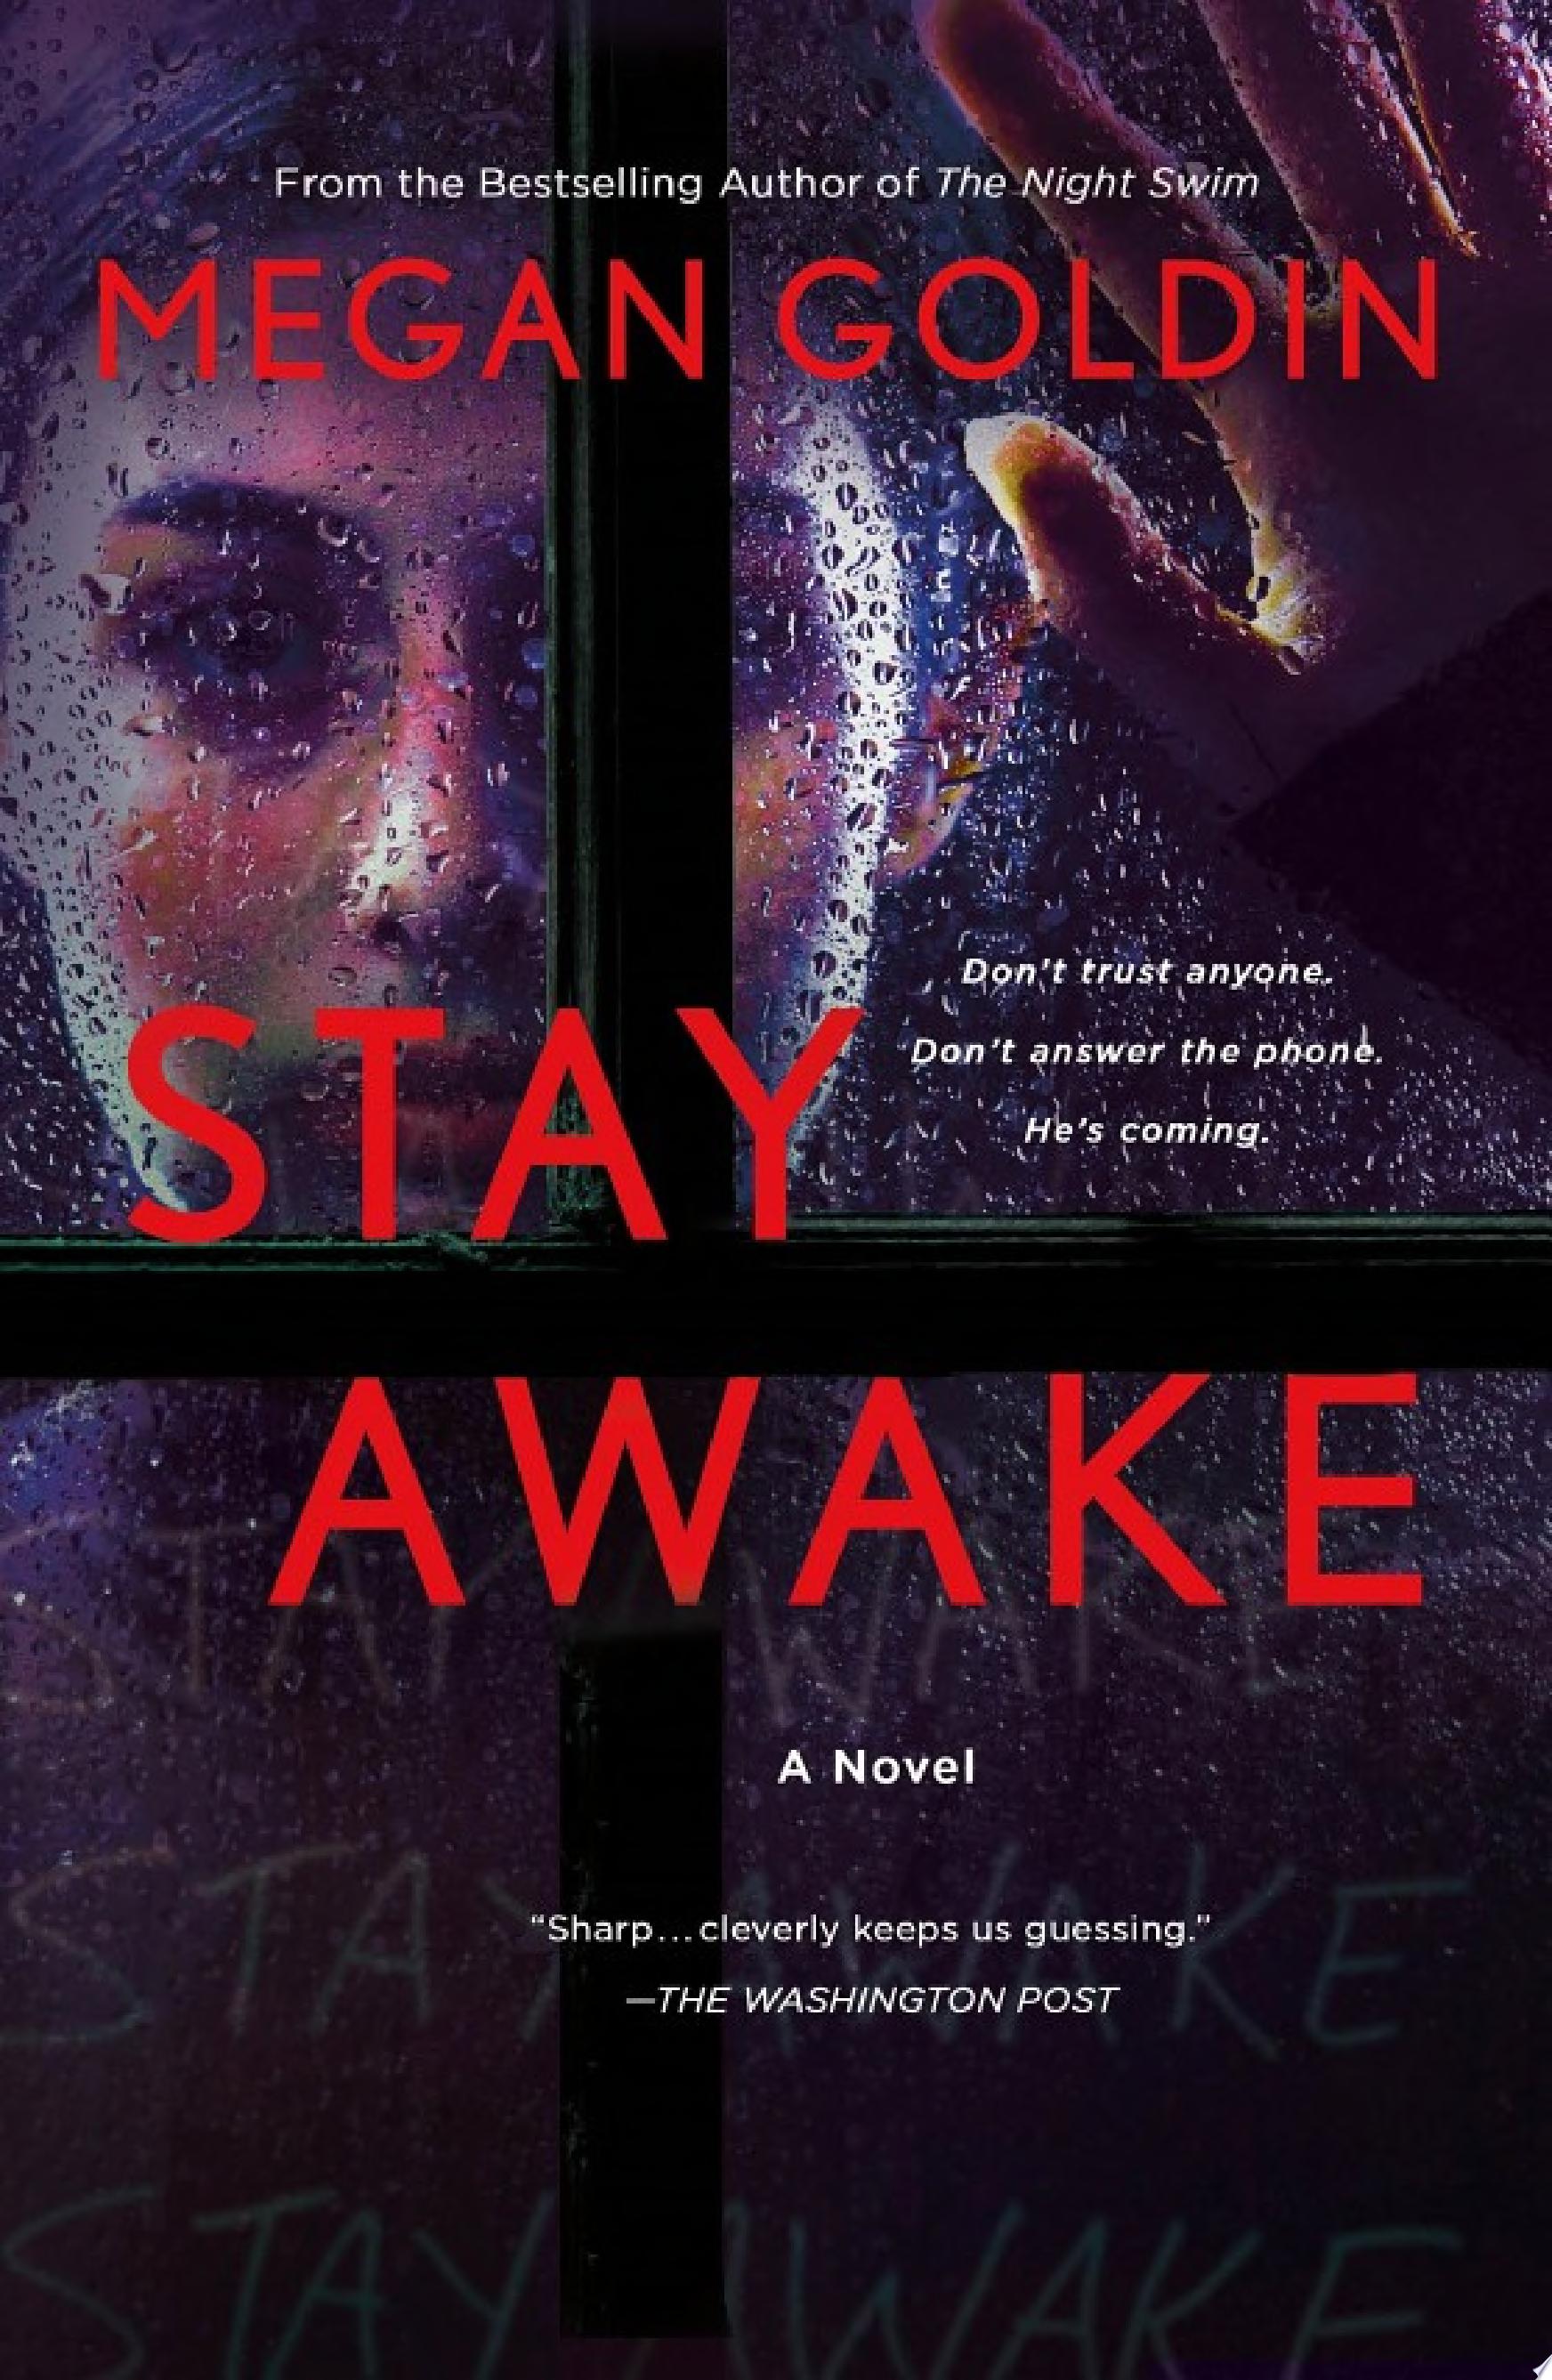 Image for "Stay Awake"